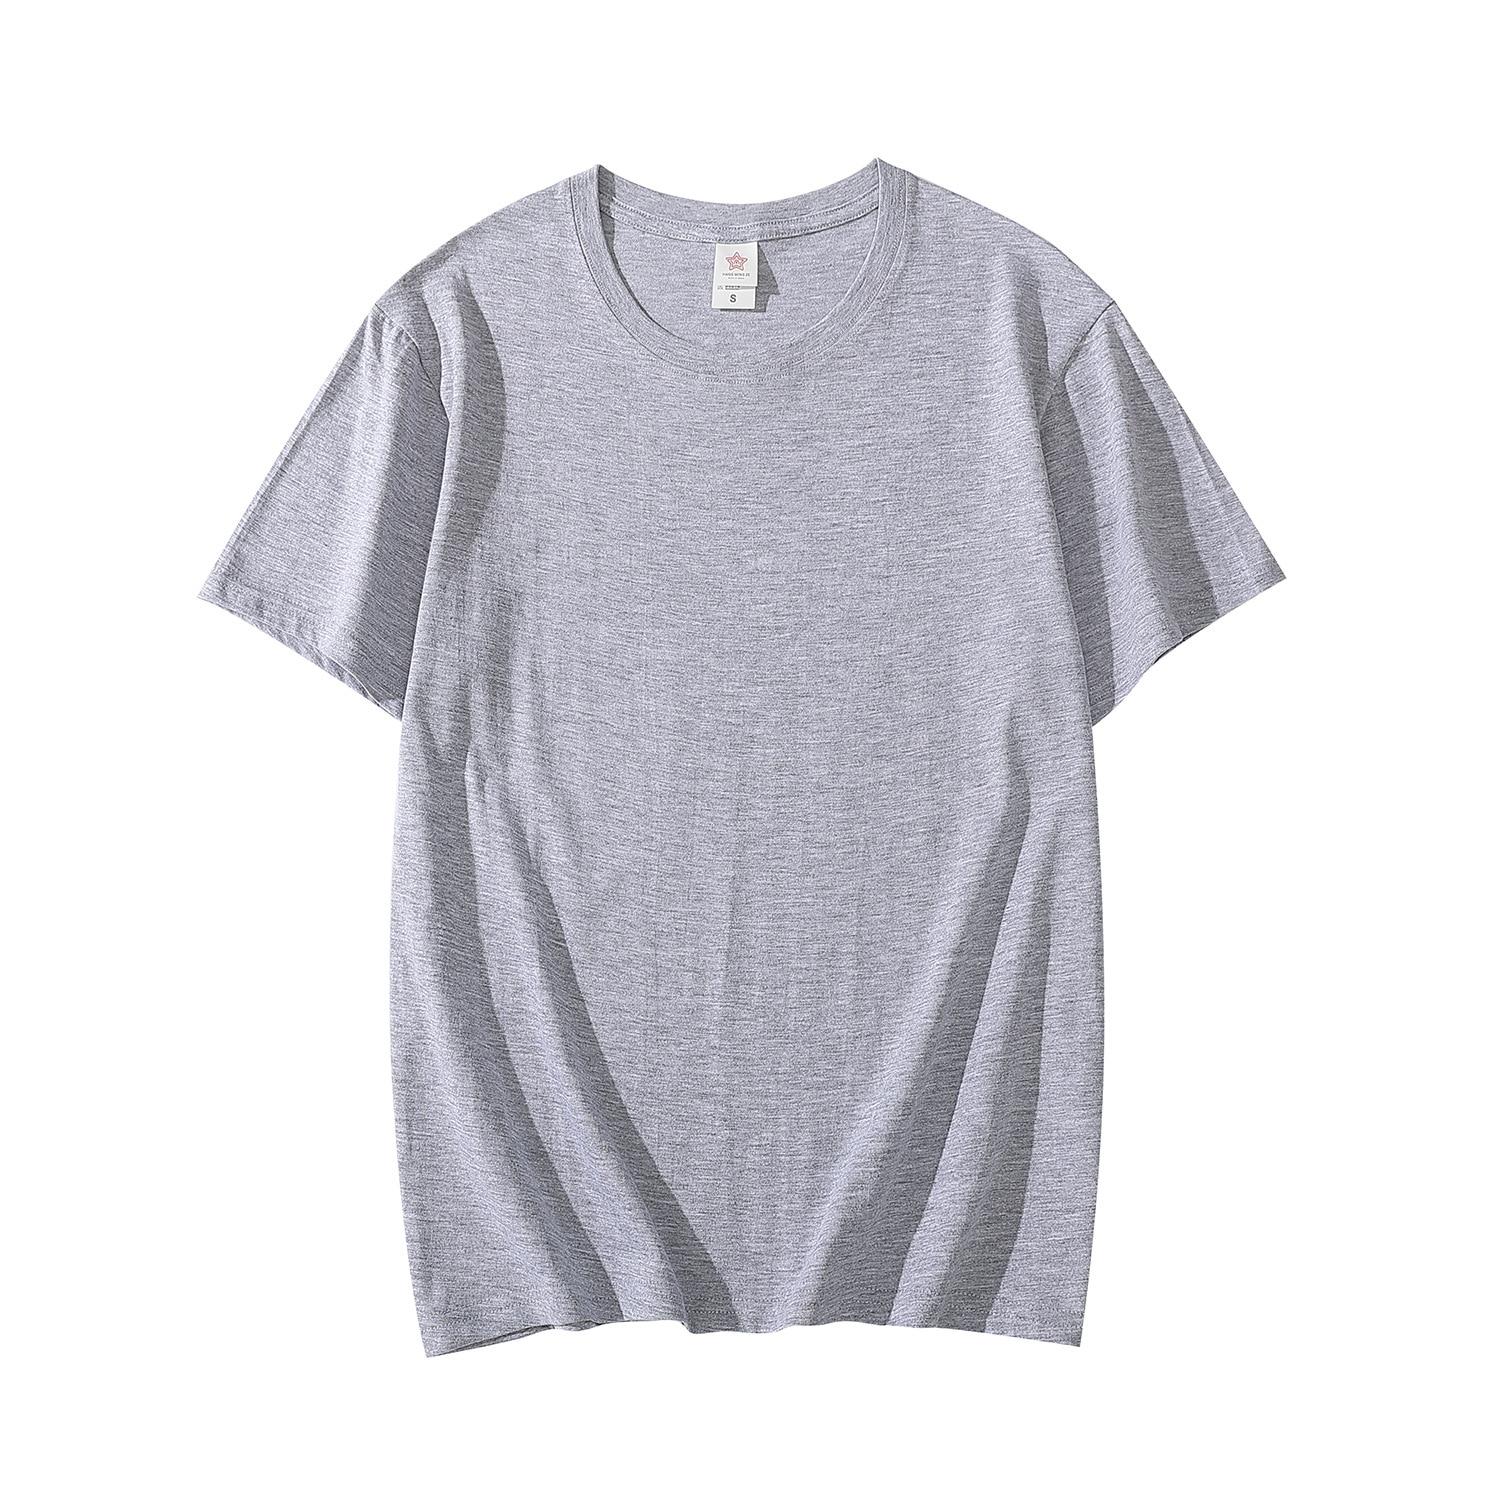 Men's Cotton Solid Color Short Sleeved T-Shirt